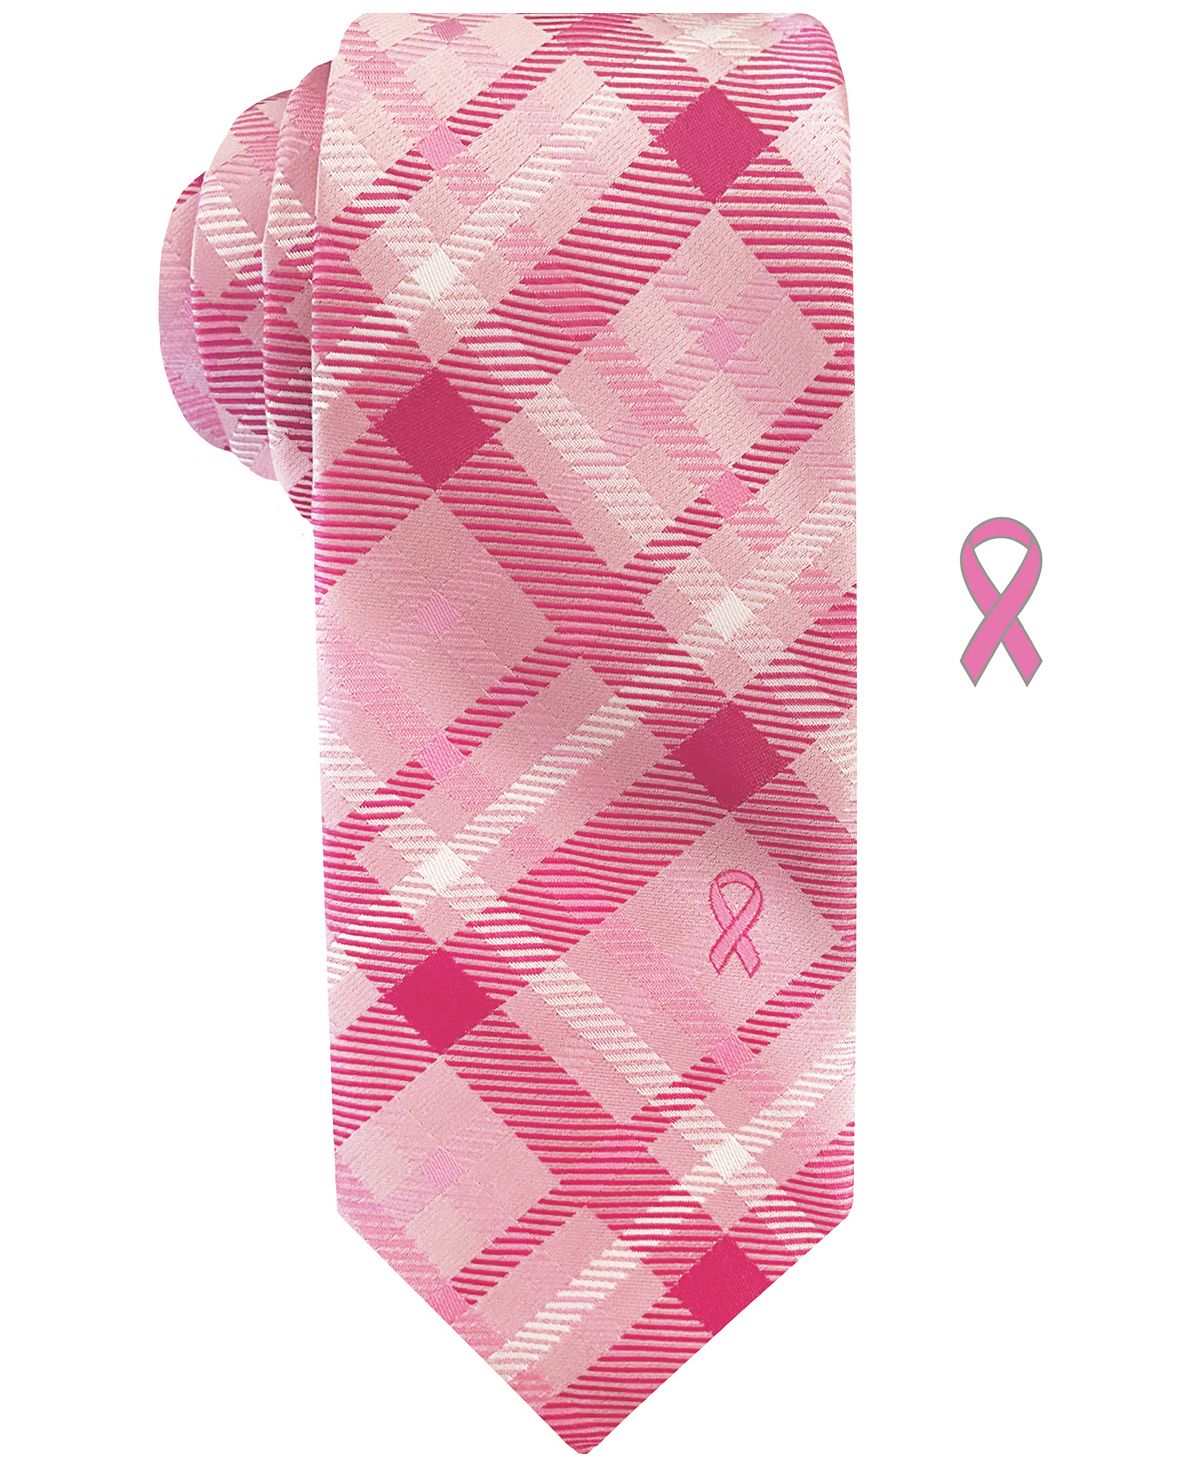 Susan G Komen Slim Plaid Tie With Lapel Pin Pink